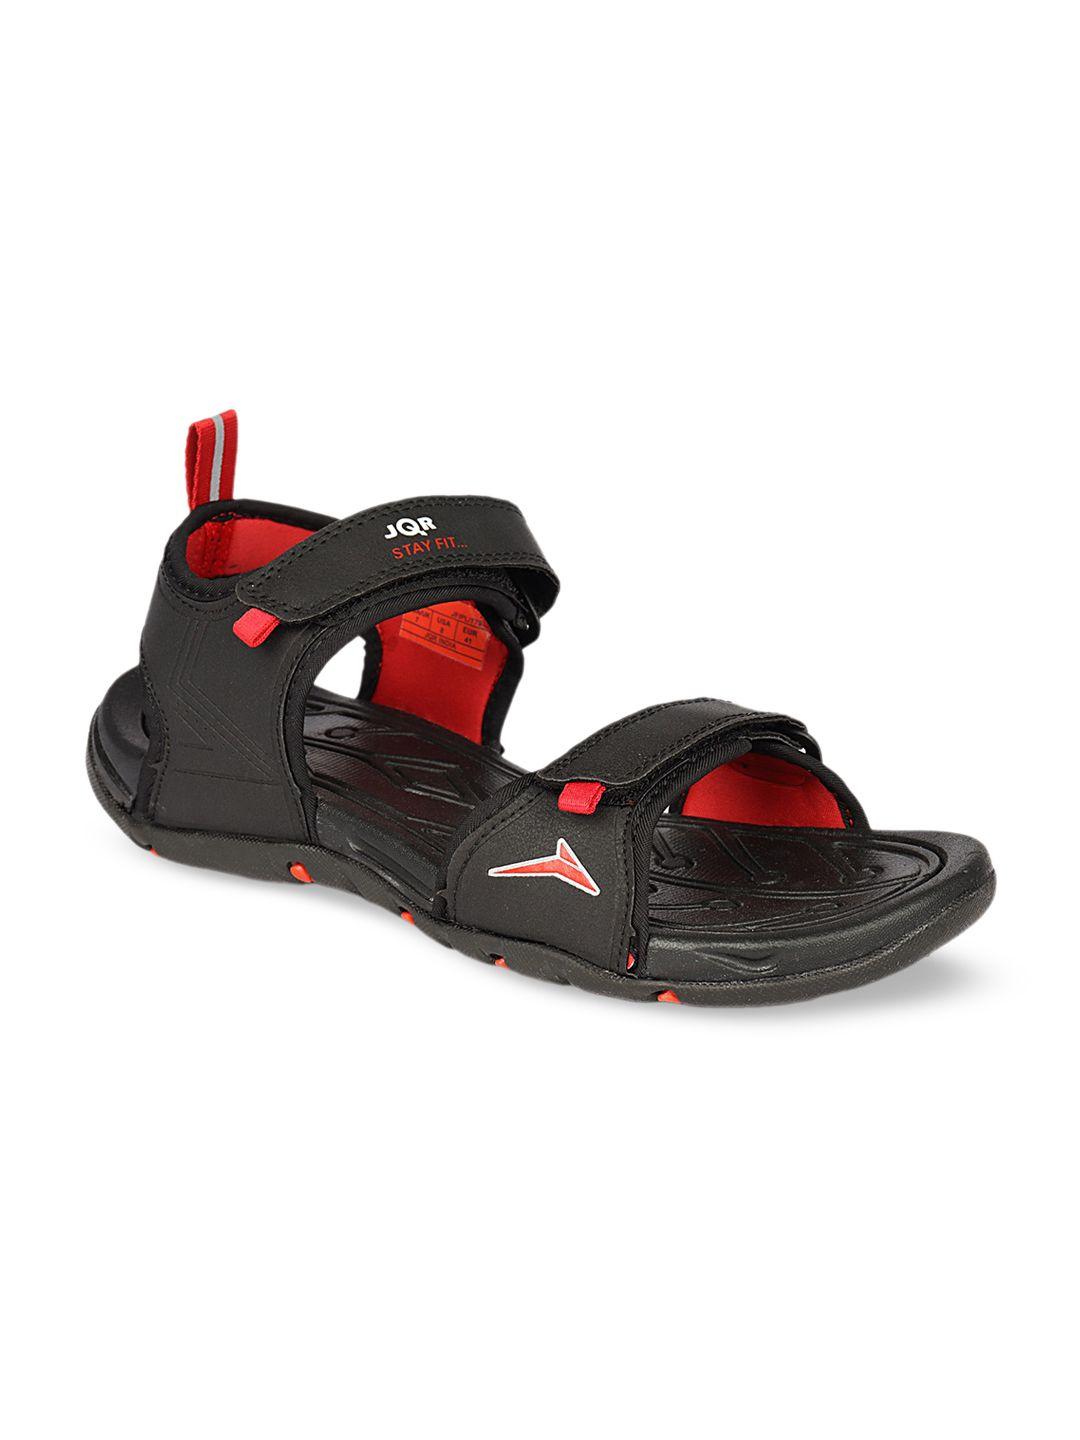 jqr-men-floater-sports-sandals